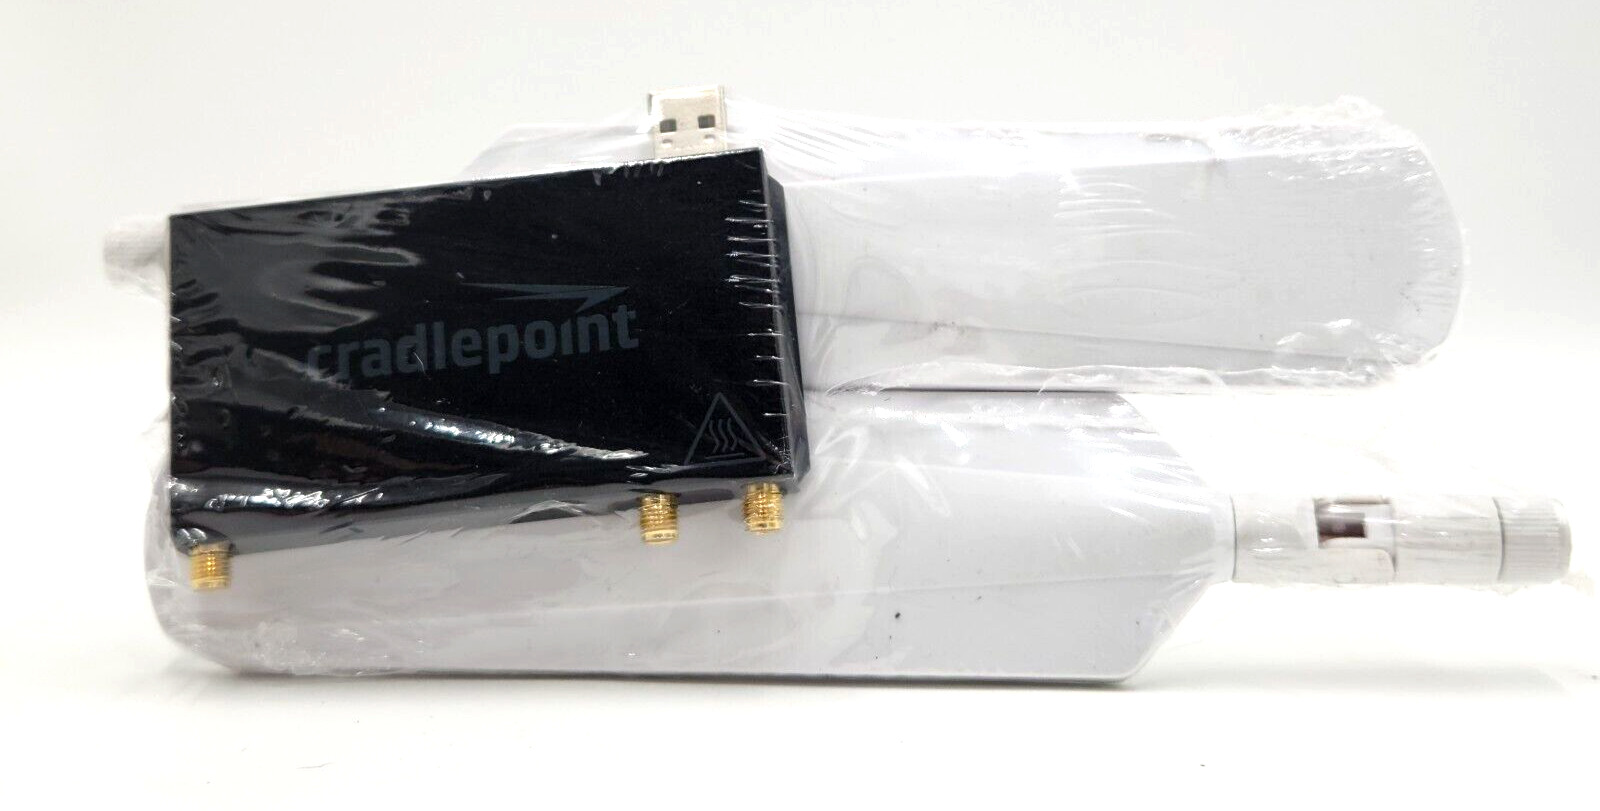 Cradlepoint MC400LP6 4G LTE Modem  w/ Dual Antennas - AT&T/Verizon/T-Mobile